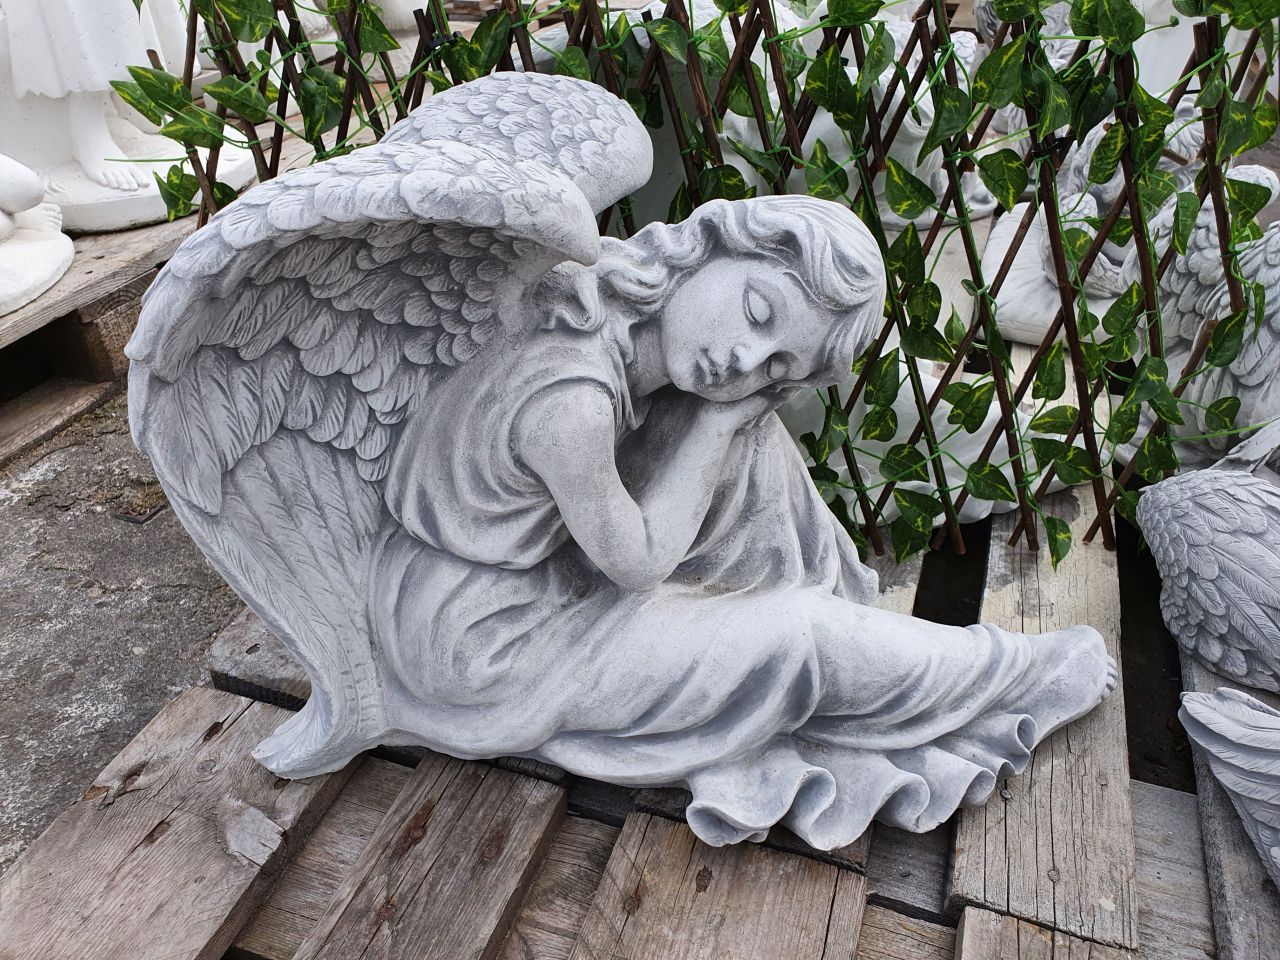 -Gartenfigur Engel an Knie angelehnt- antik grau- unter Statuen/Skulpturen Engel